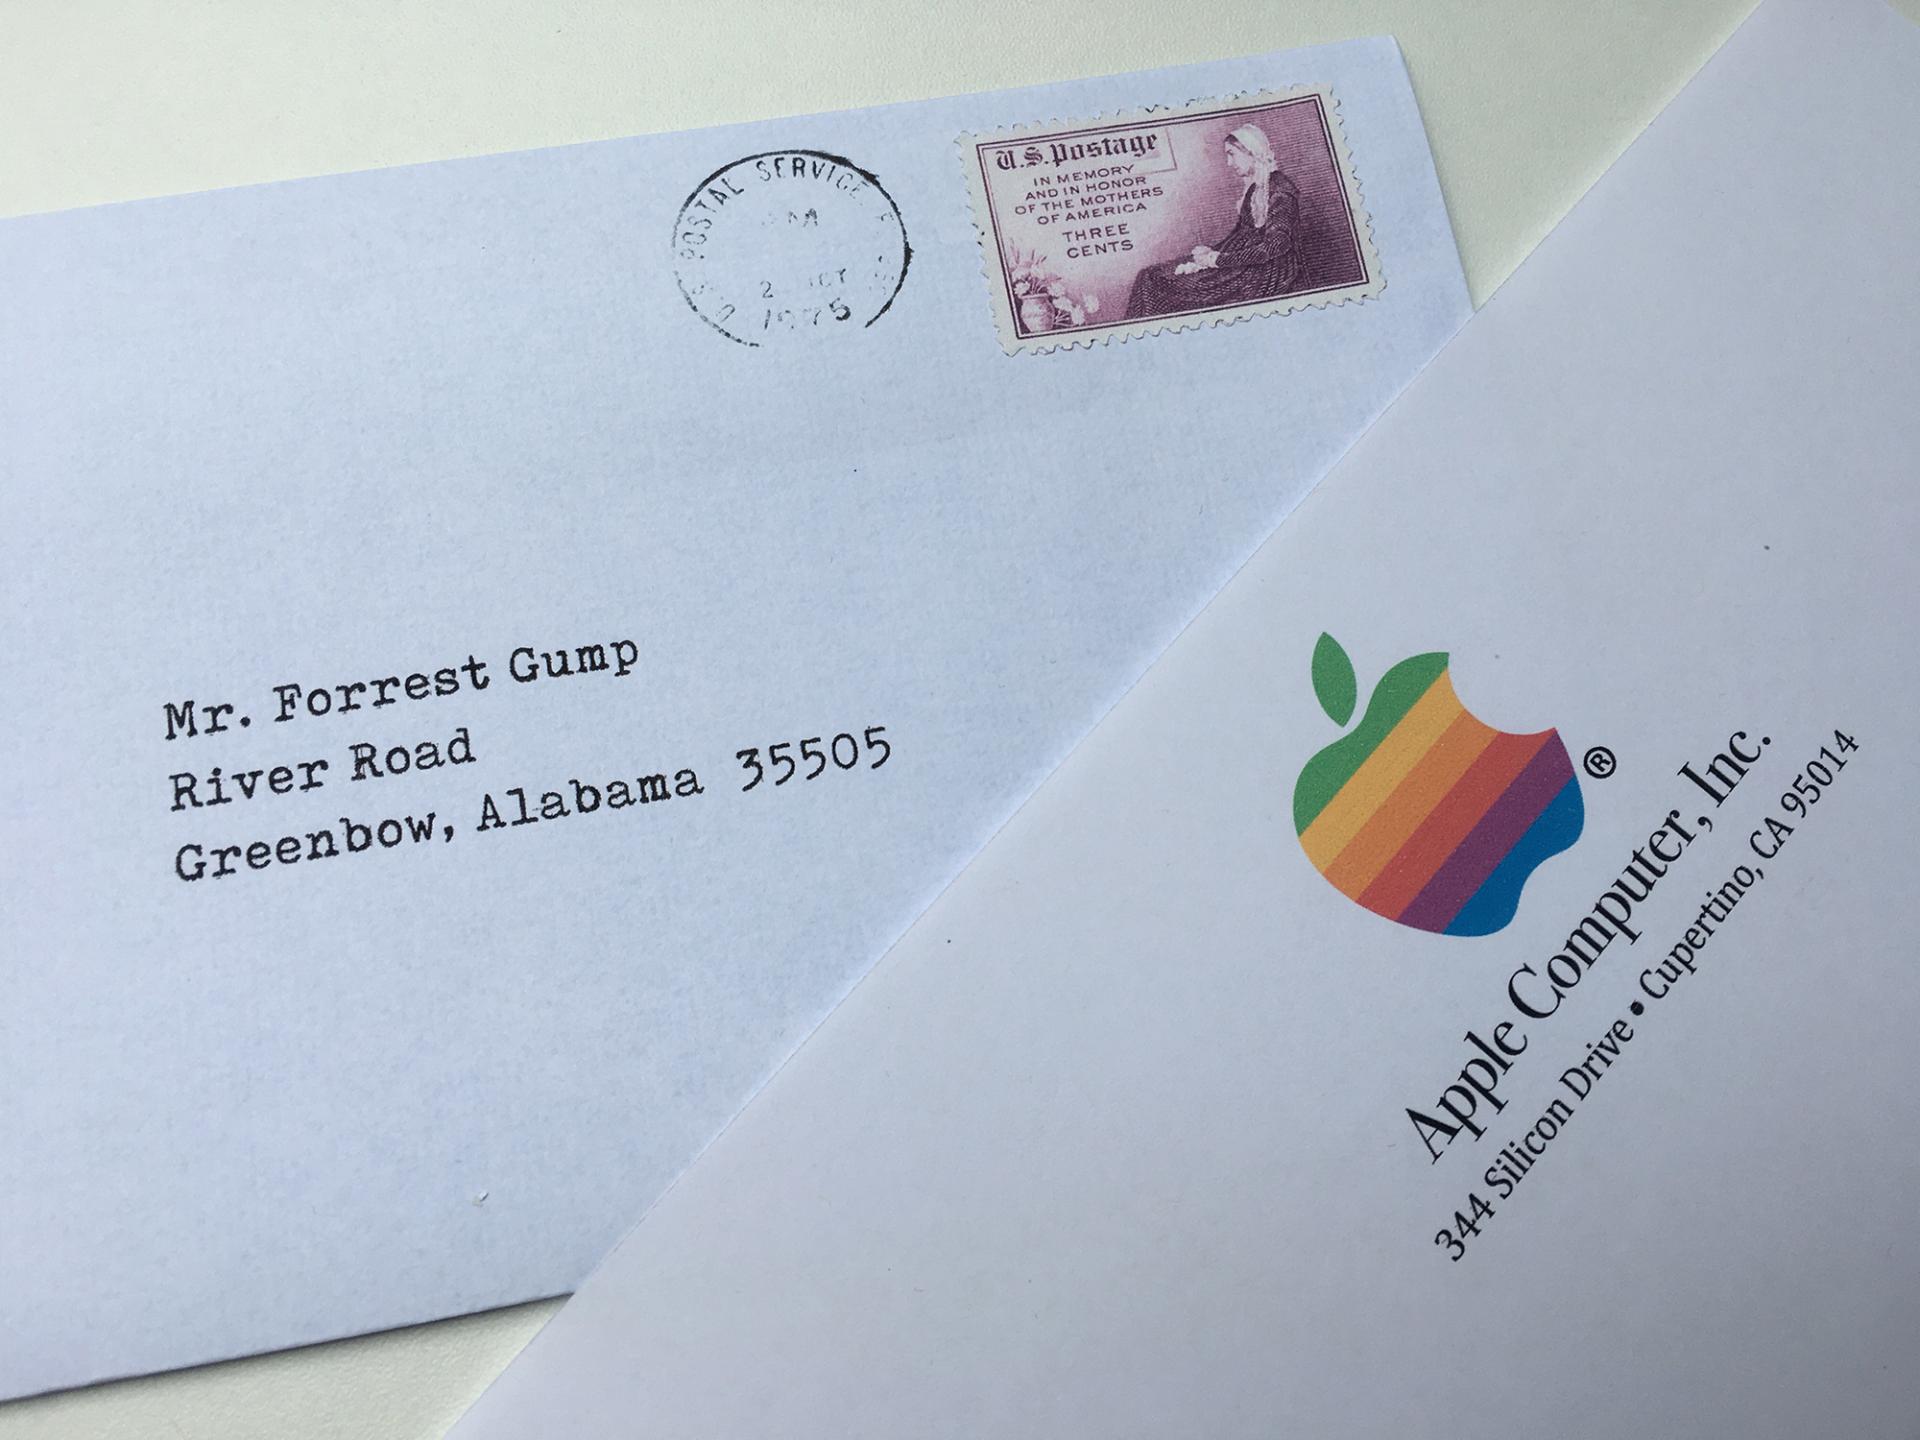 Forrest gump apple company letter enveloppe september 23 1975 cupertino ca khristore auction